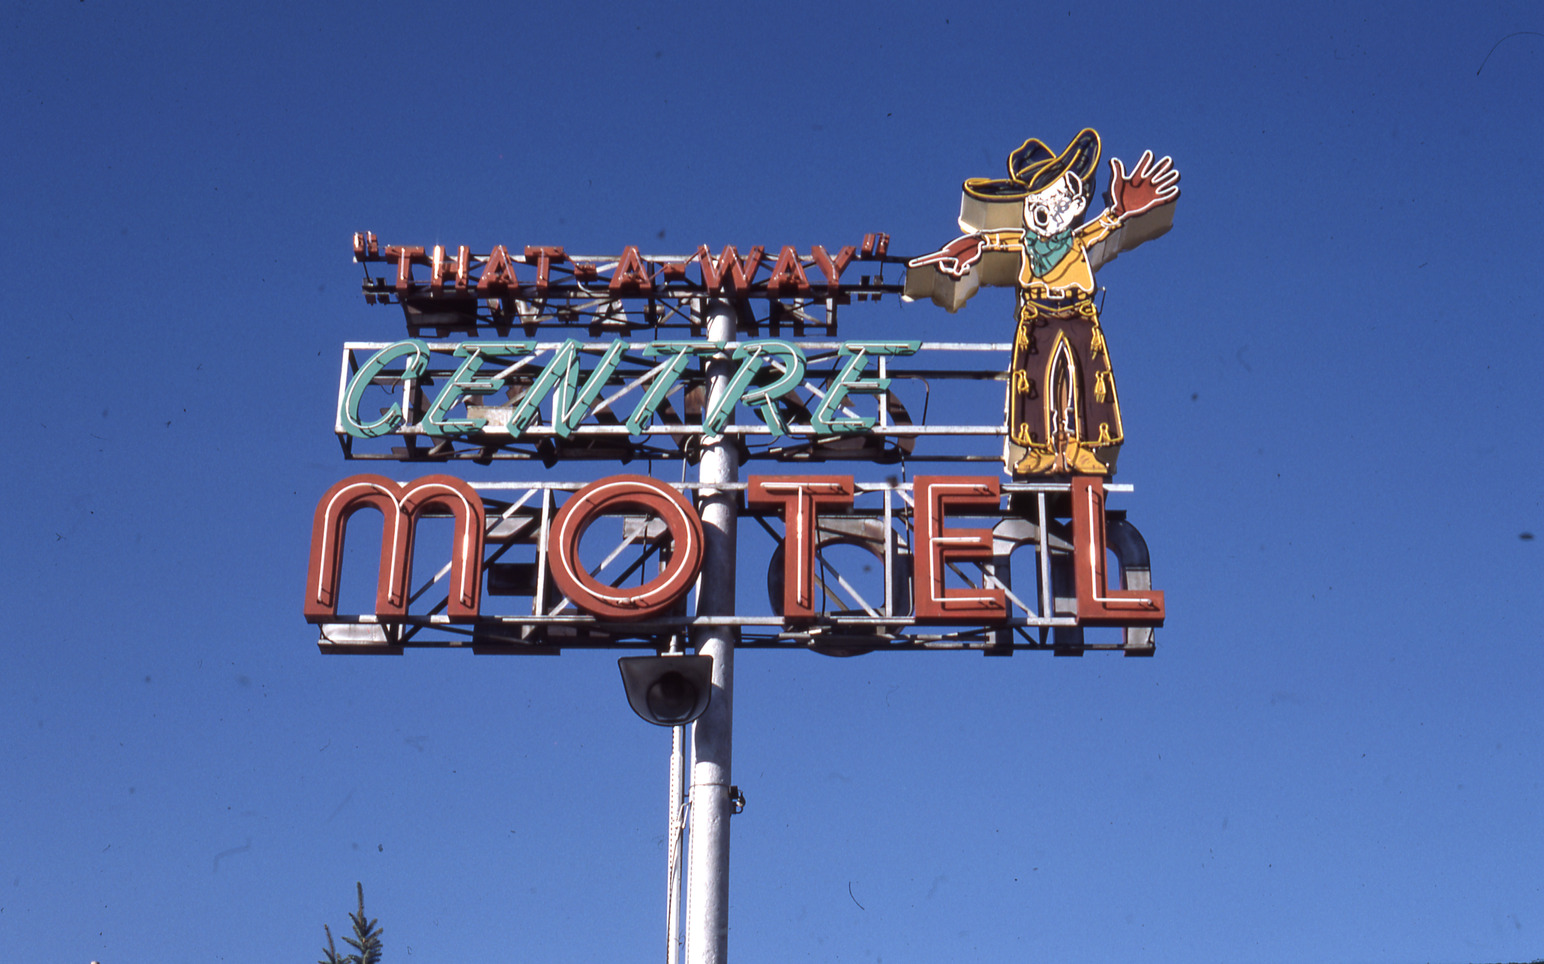 Centre Motel pylon sign, Elko, Nevada: photographic print